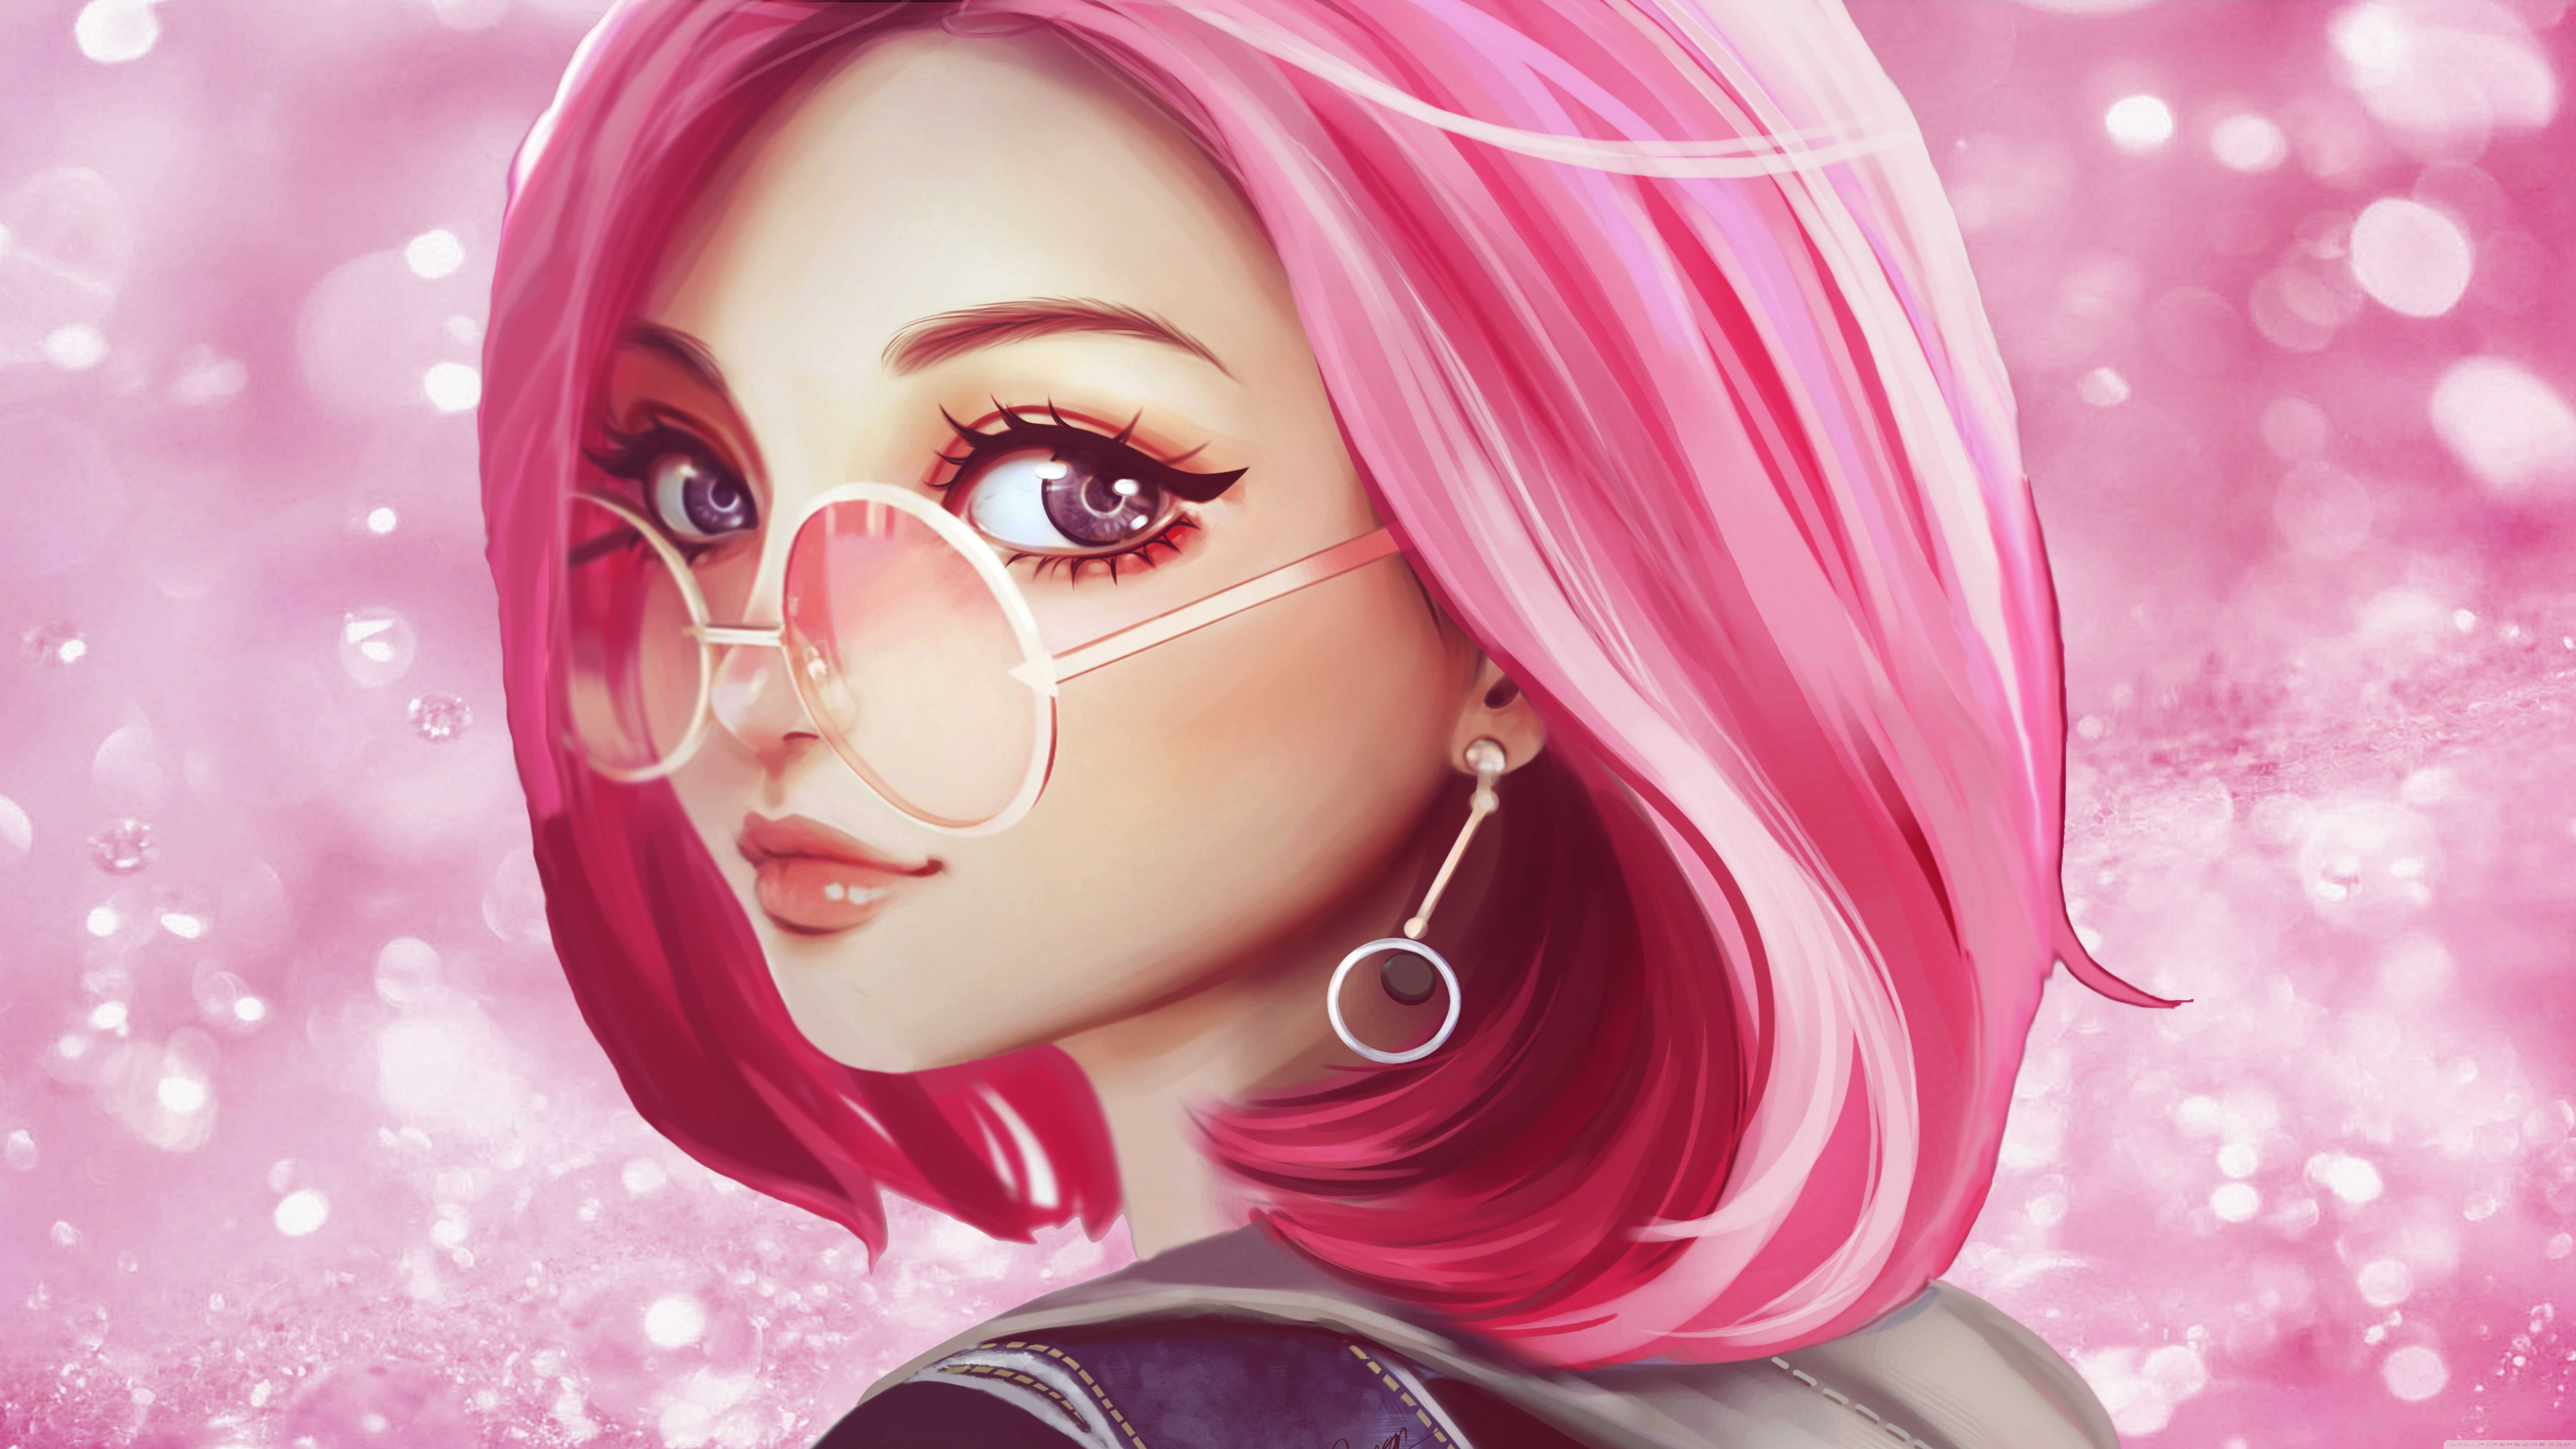 Download Cute Girl Pink Hair Sunglasses Digital Art. UltraHD Wallpaper